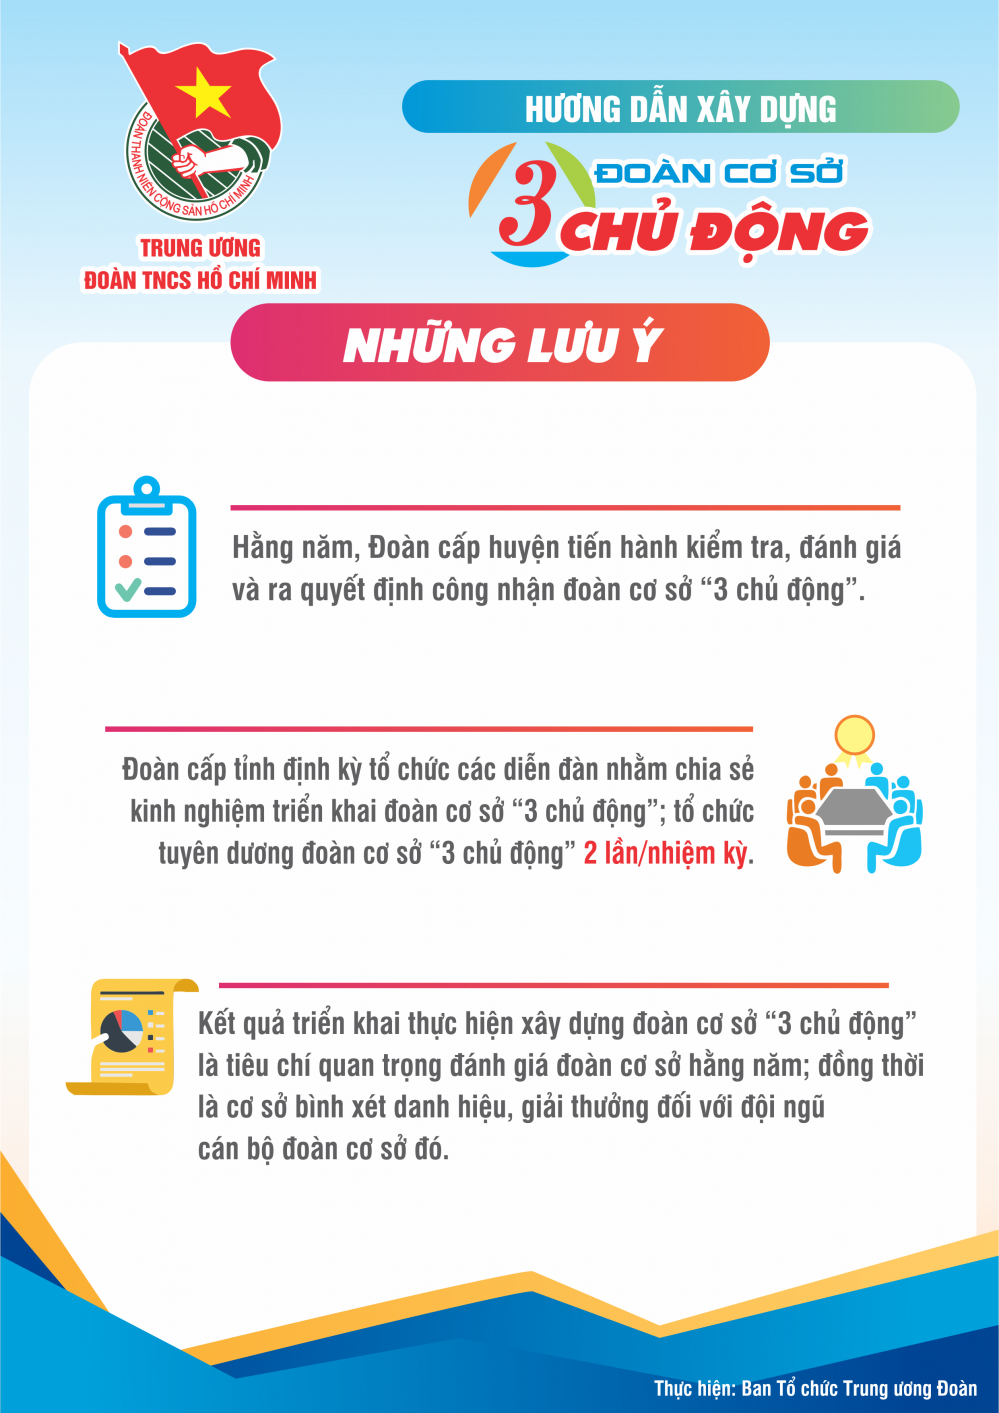 INFO 3 CHU DONG 5